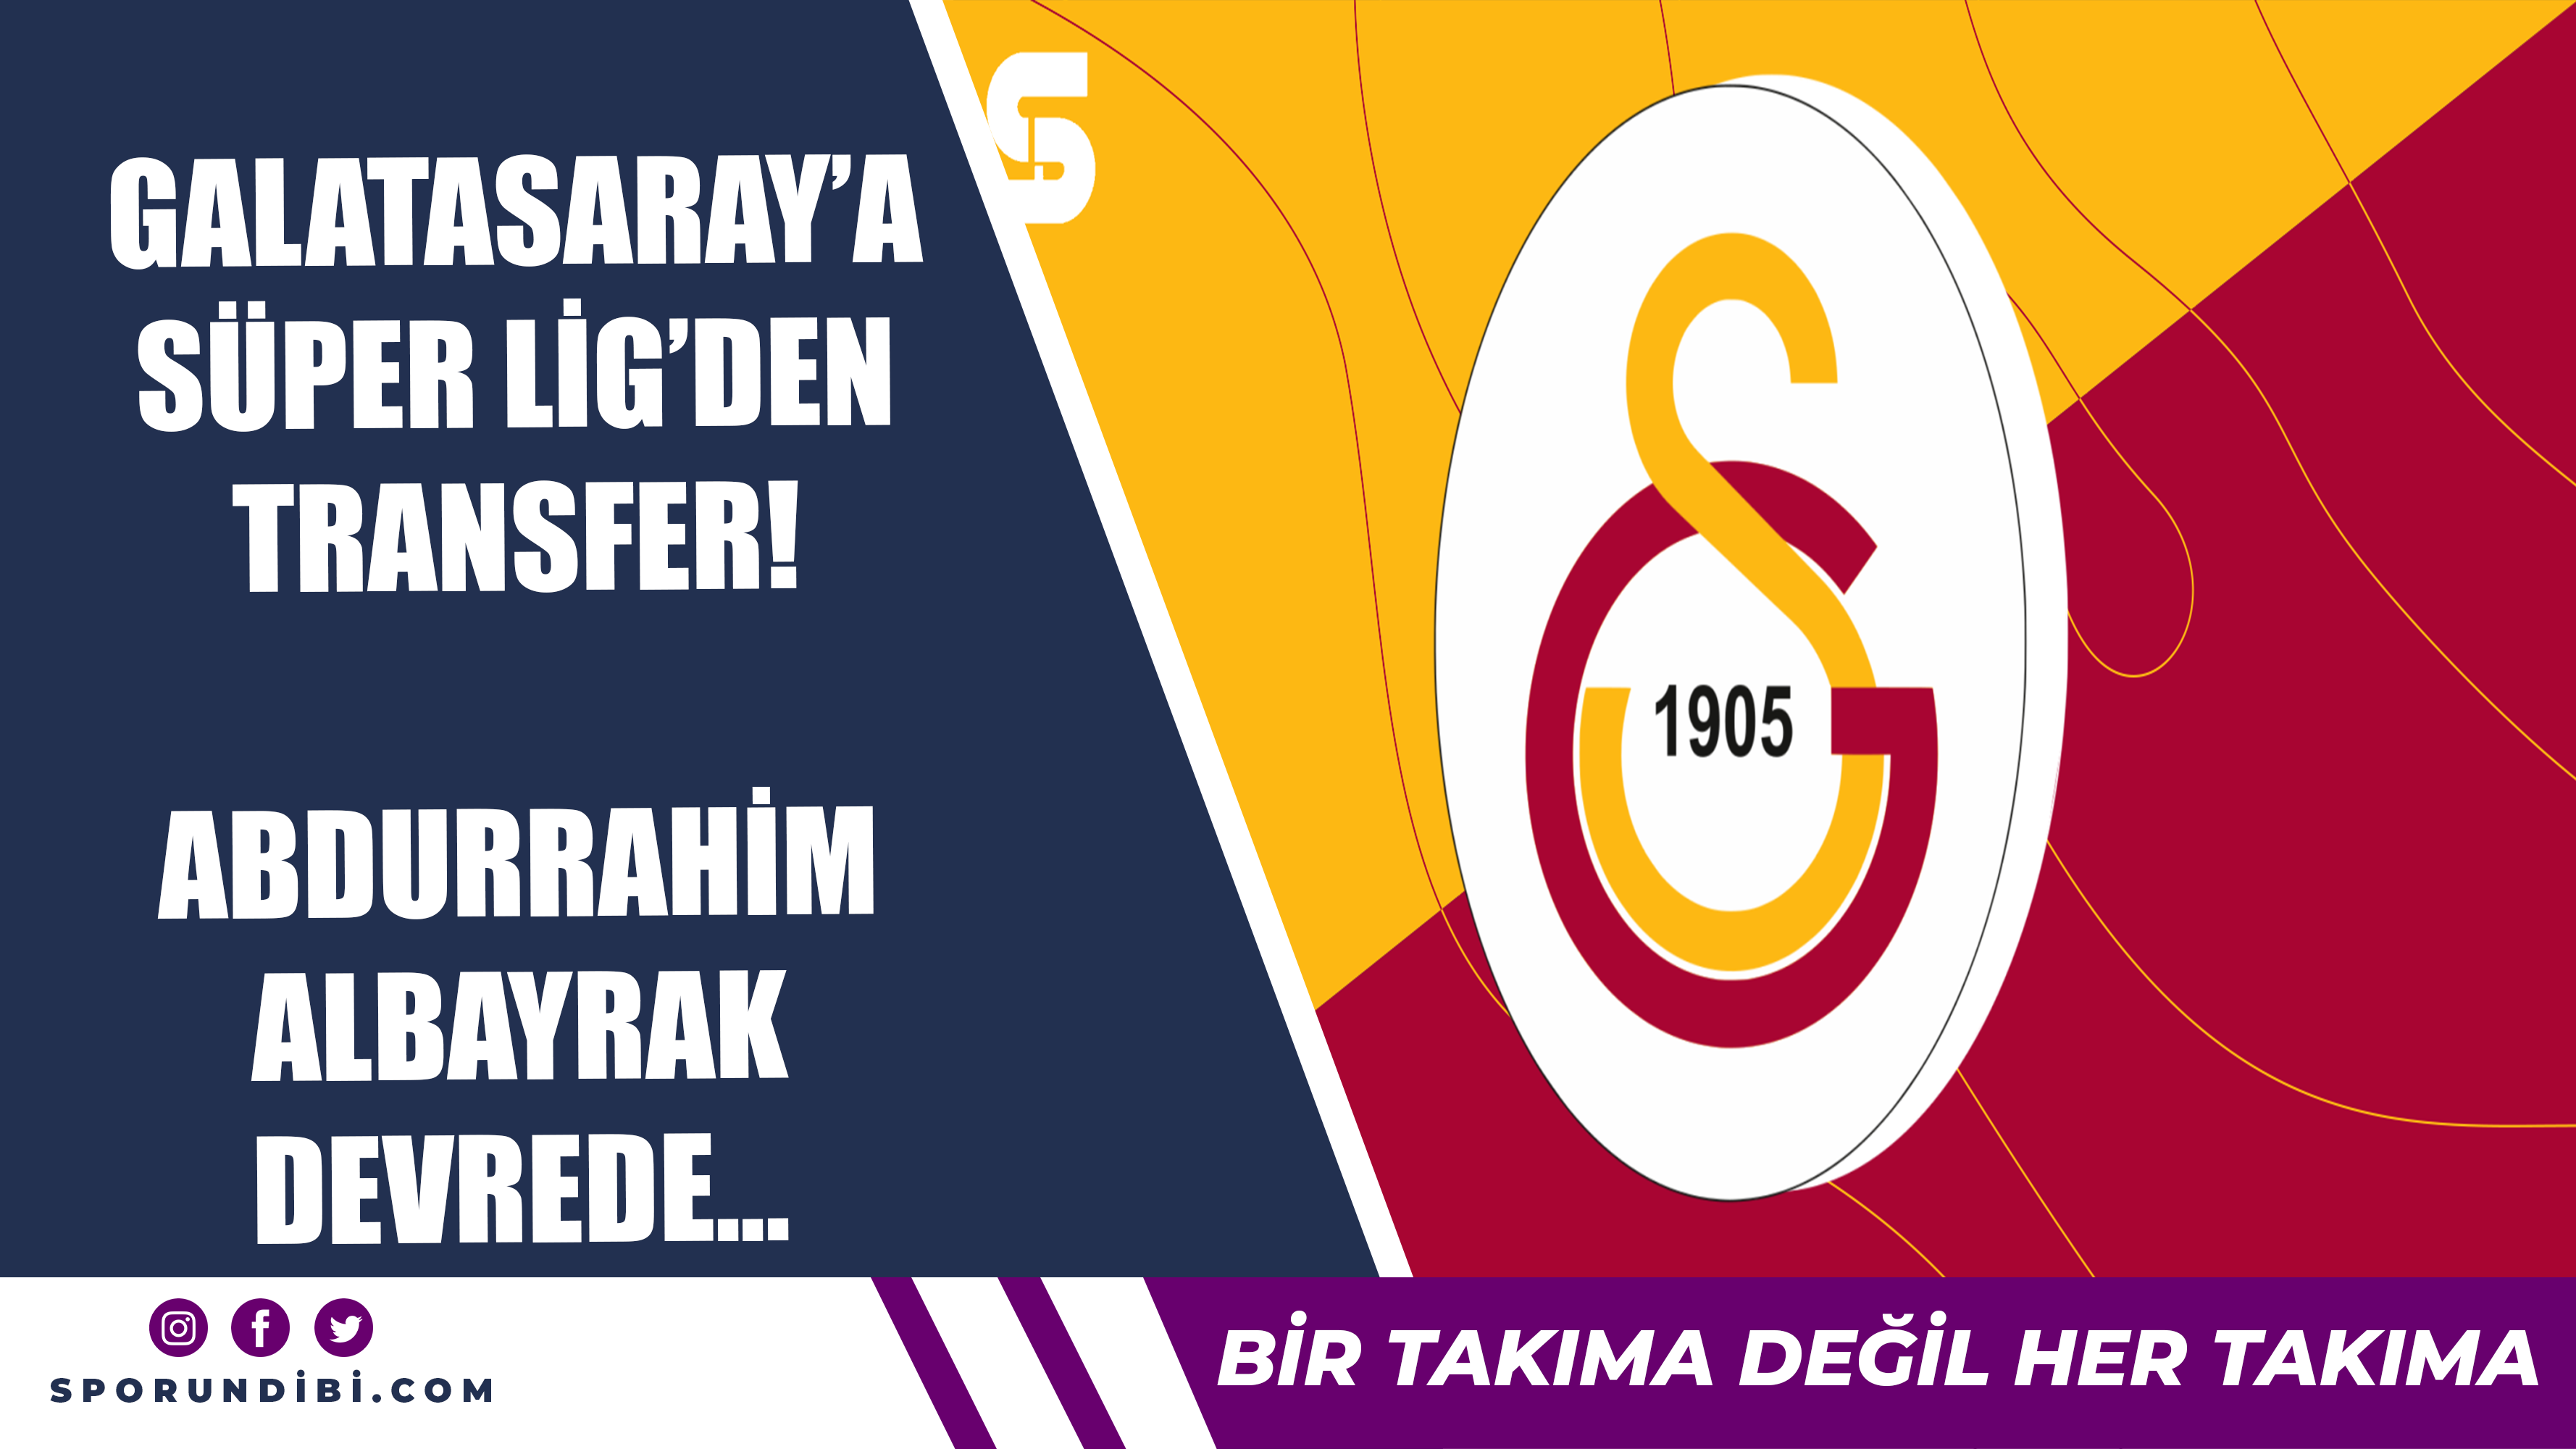 Galatasaray'a Süper Lig'den transfer! Abdurrahim Albayrak devrede...